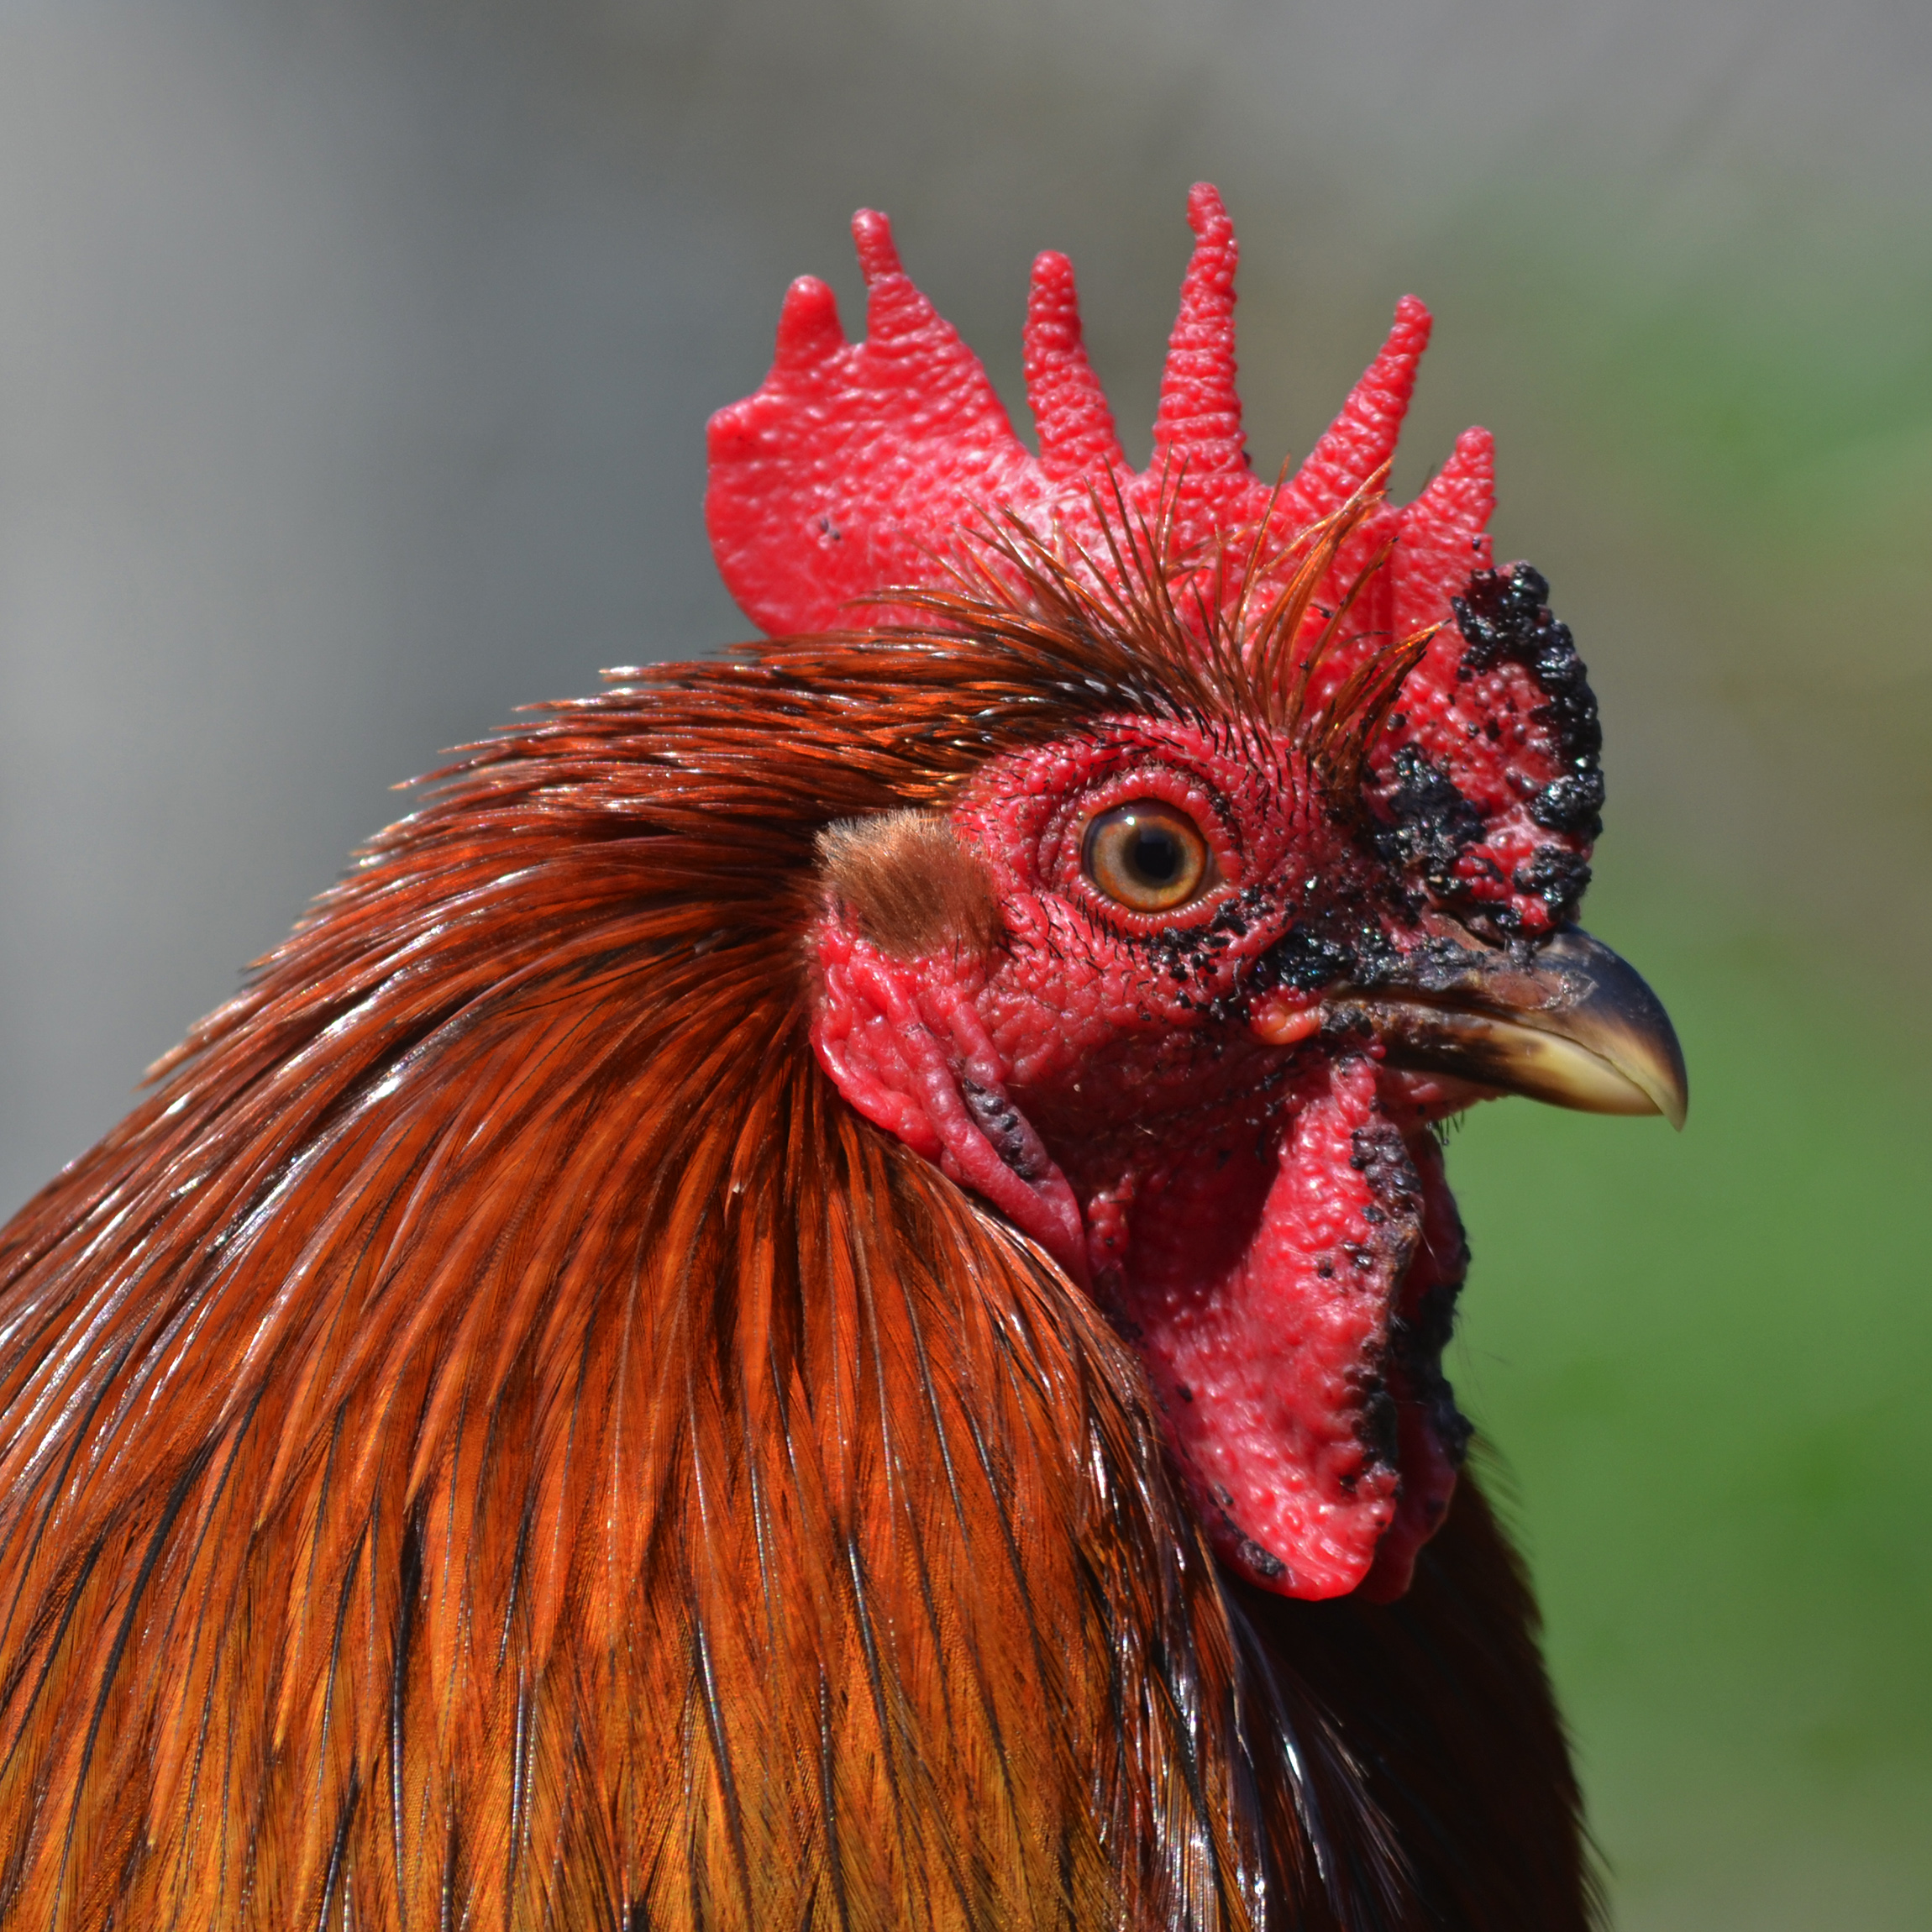 File:Paulx - Bantam rooster 03.jpg - Wikimedia Commons